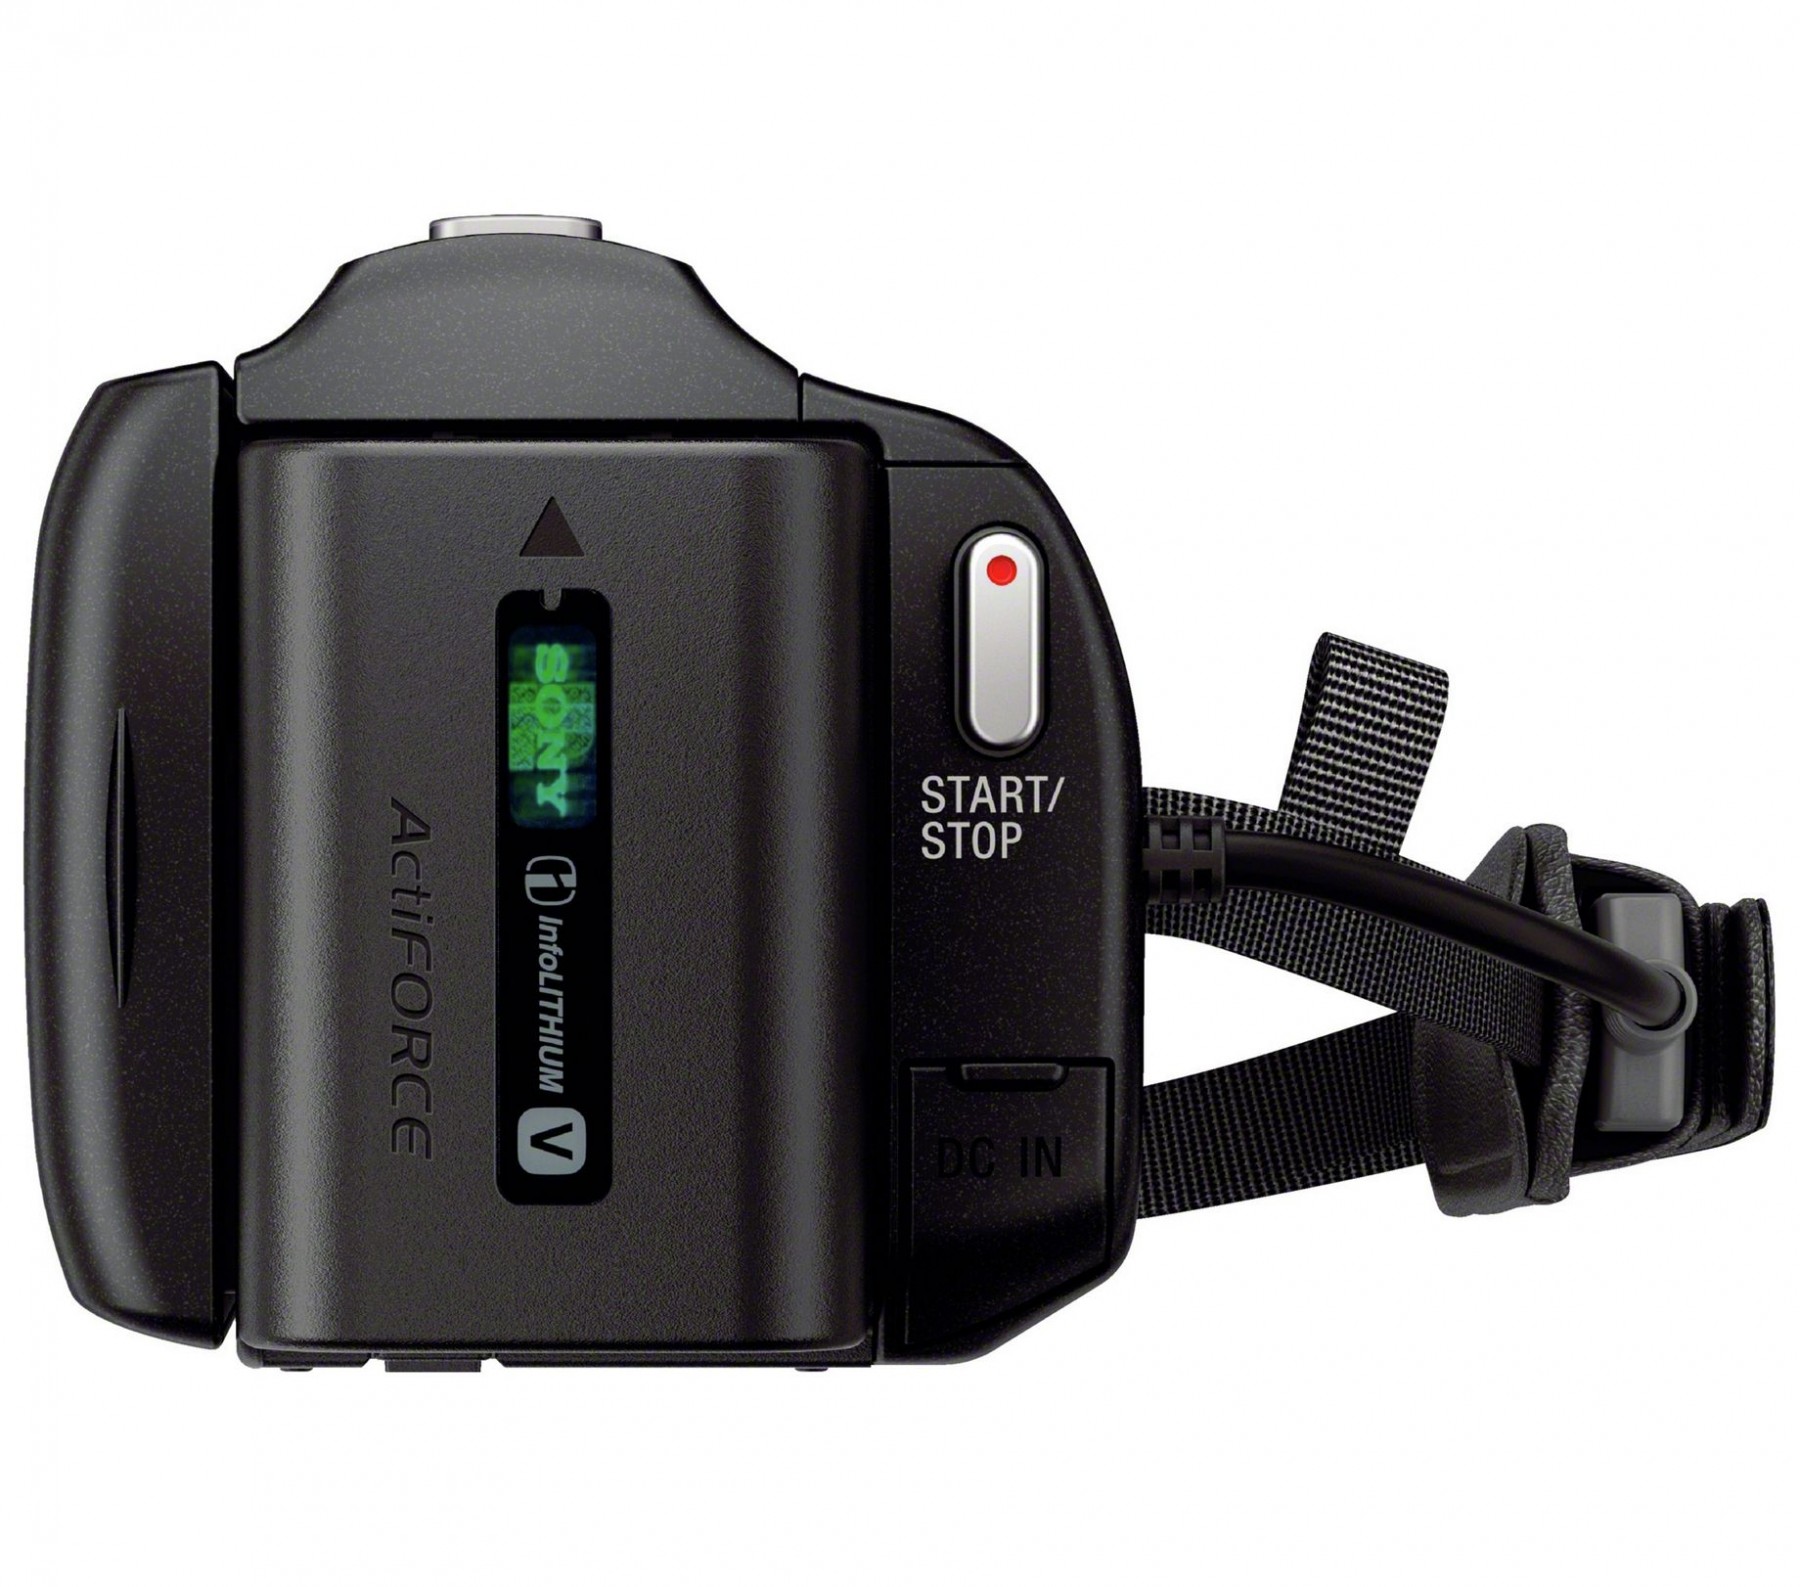 Sony HDR-CX450 Digital Video Camera : Digital Video Camera | DWI ...